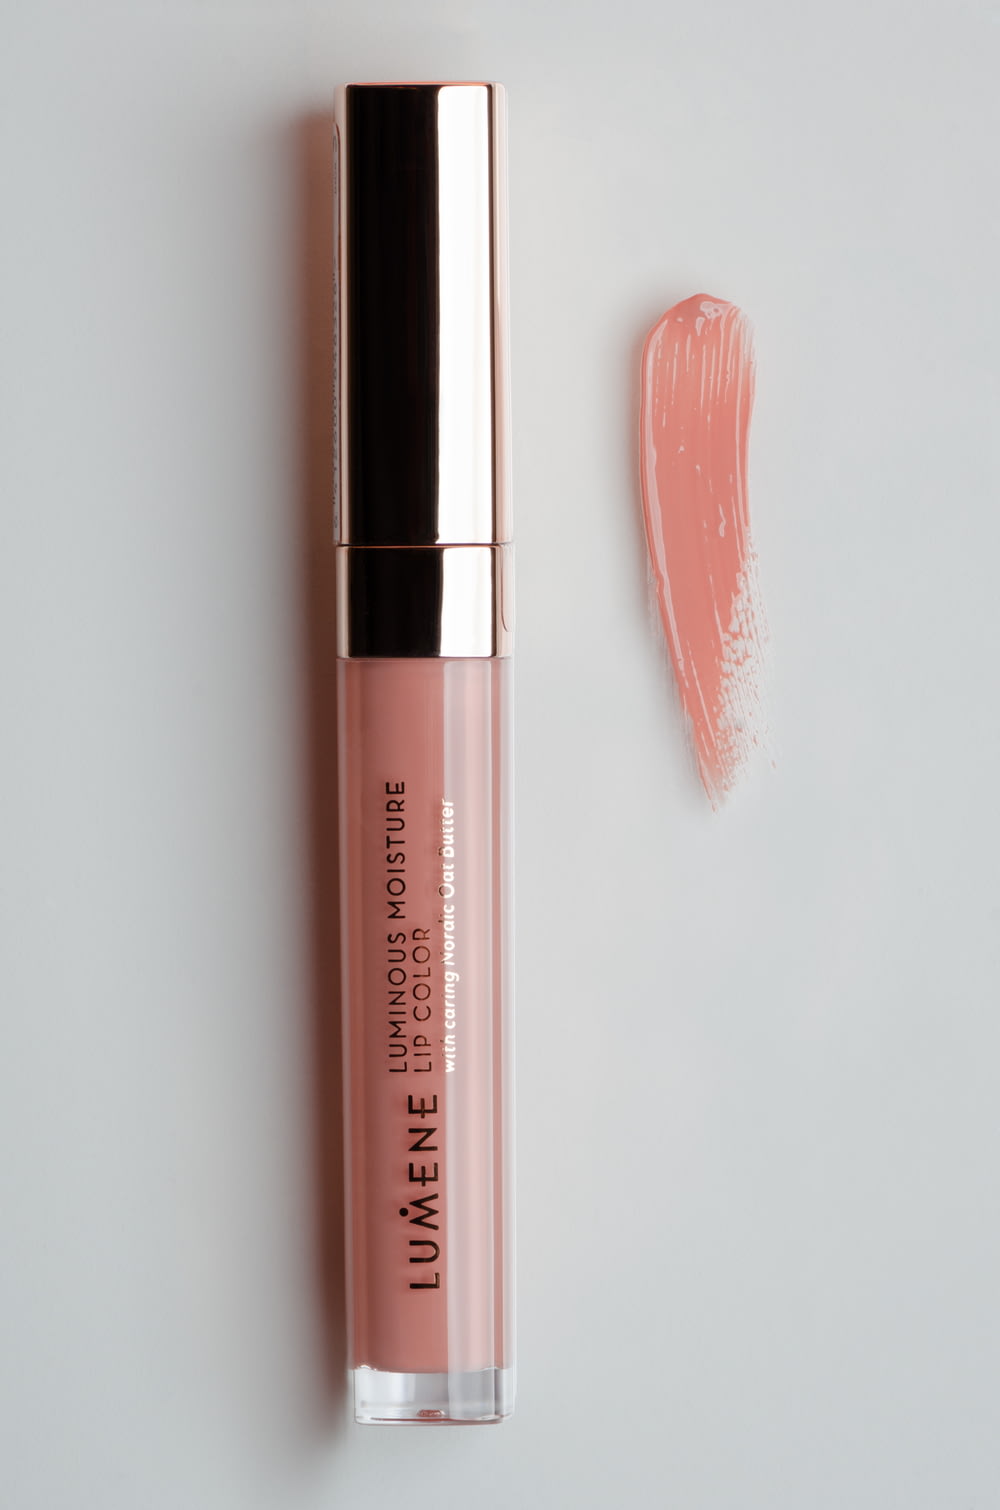 a pink lip gloss next to a lipstick tube